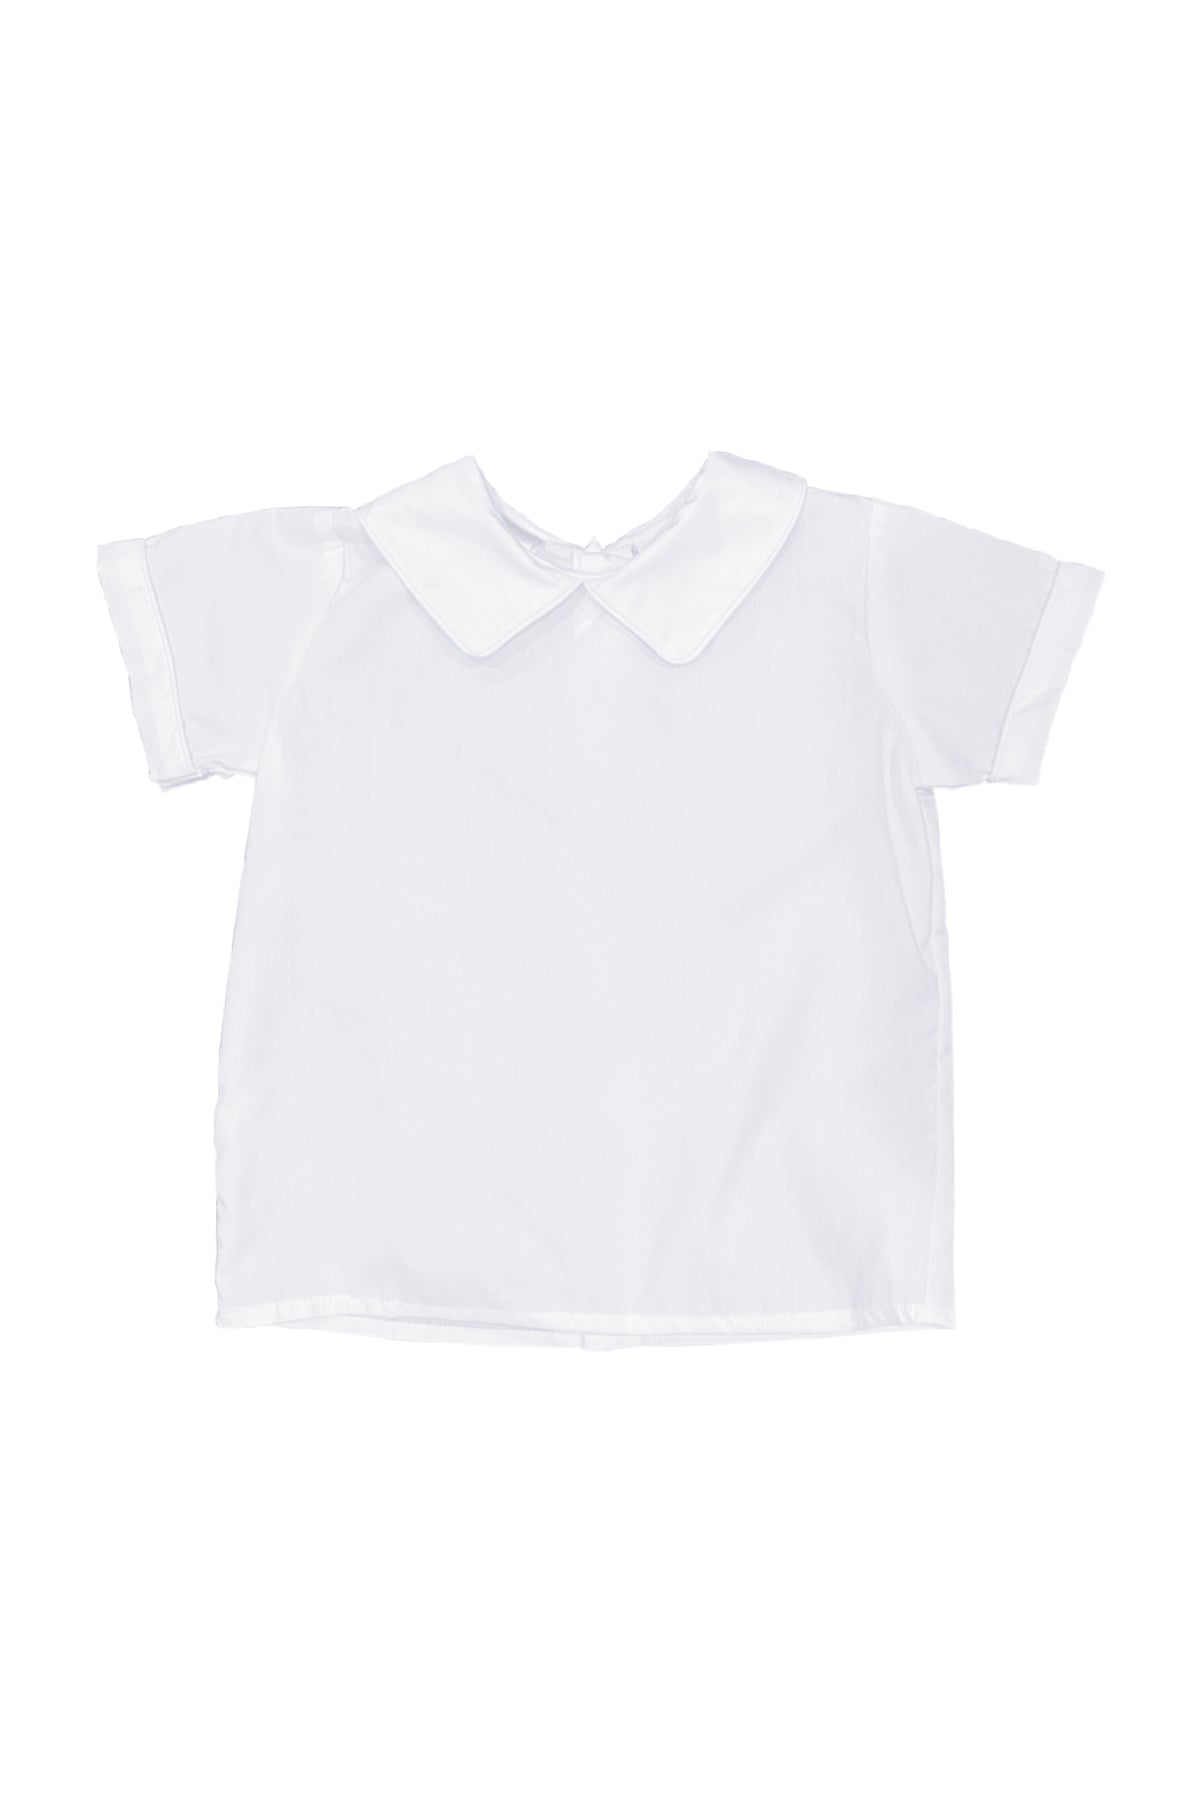 Short Woven White Shirt - Boy